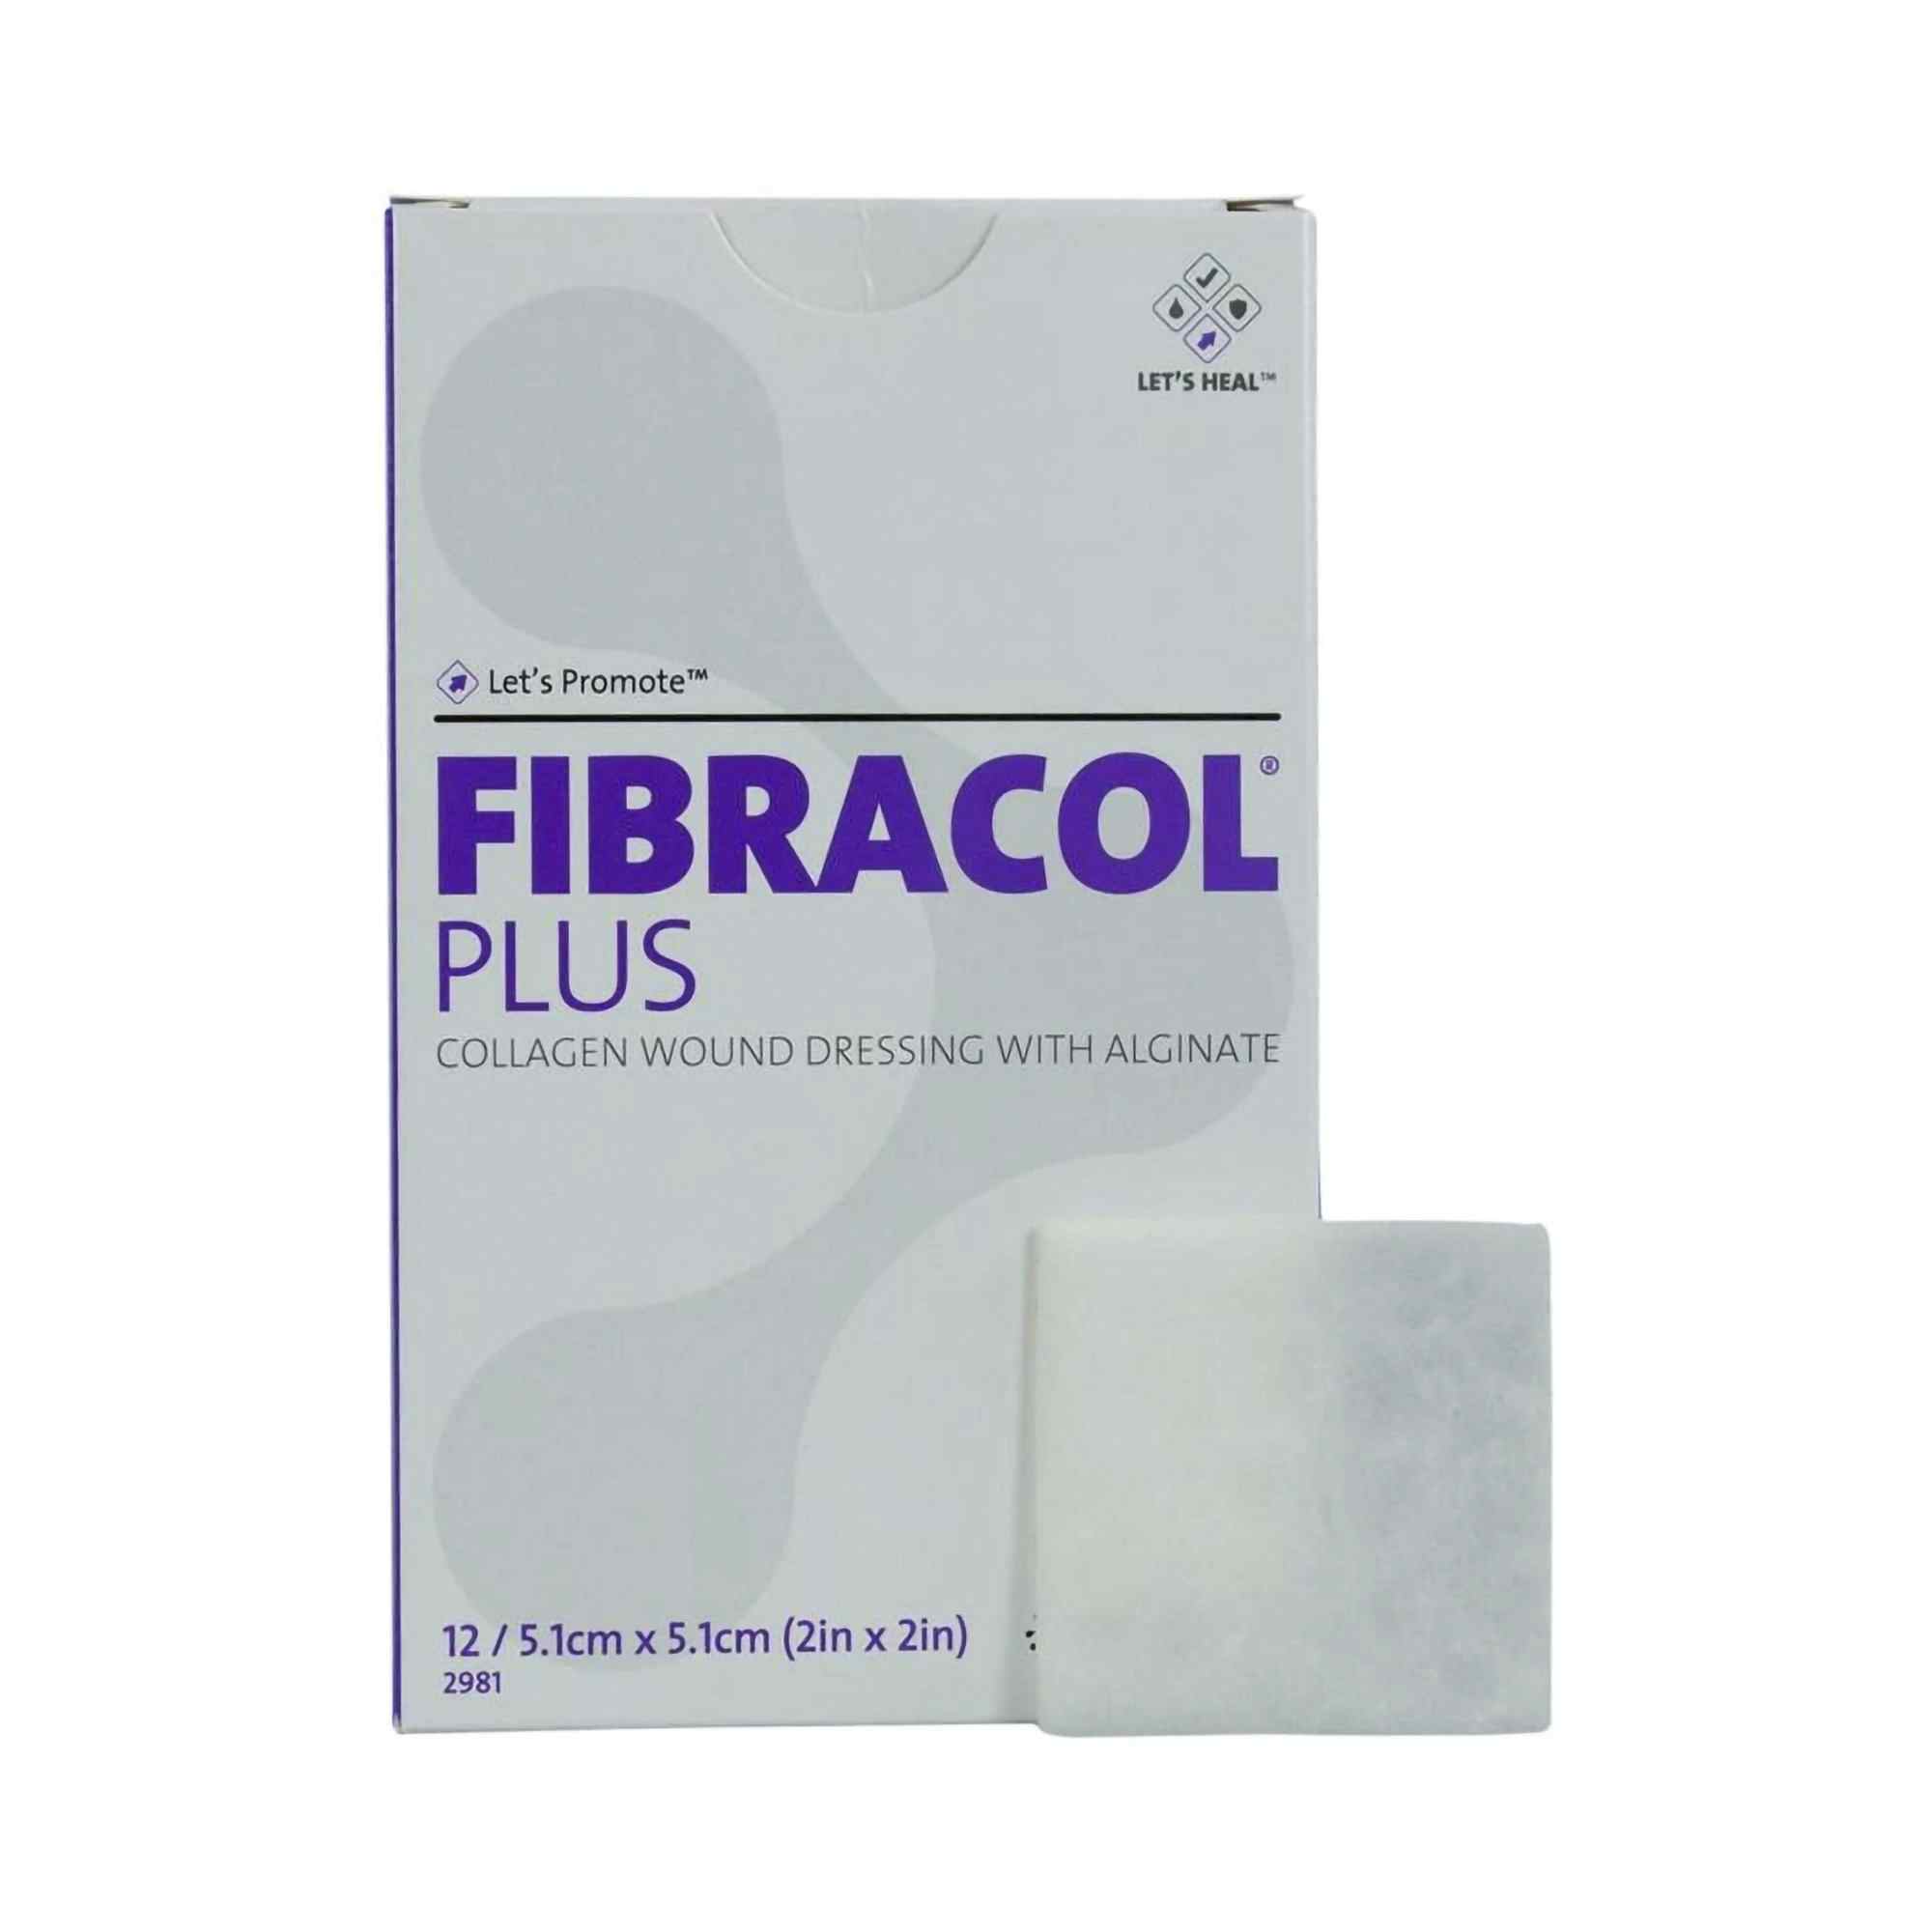 Fibracol Plus Collagen Wound Dressing with Alginate, 2 X 2"